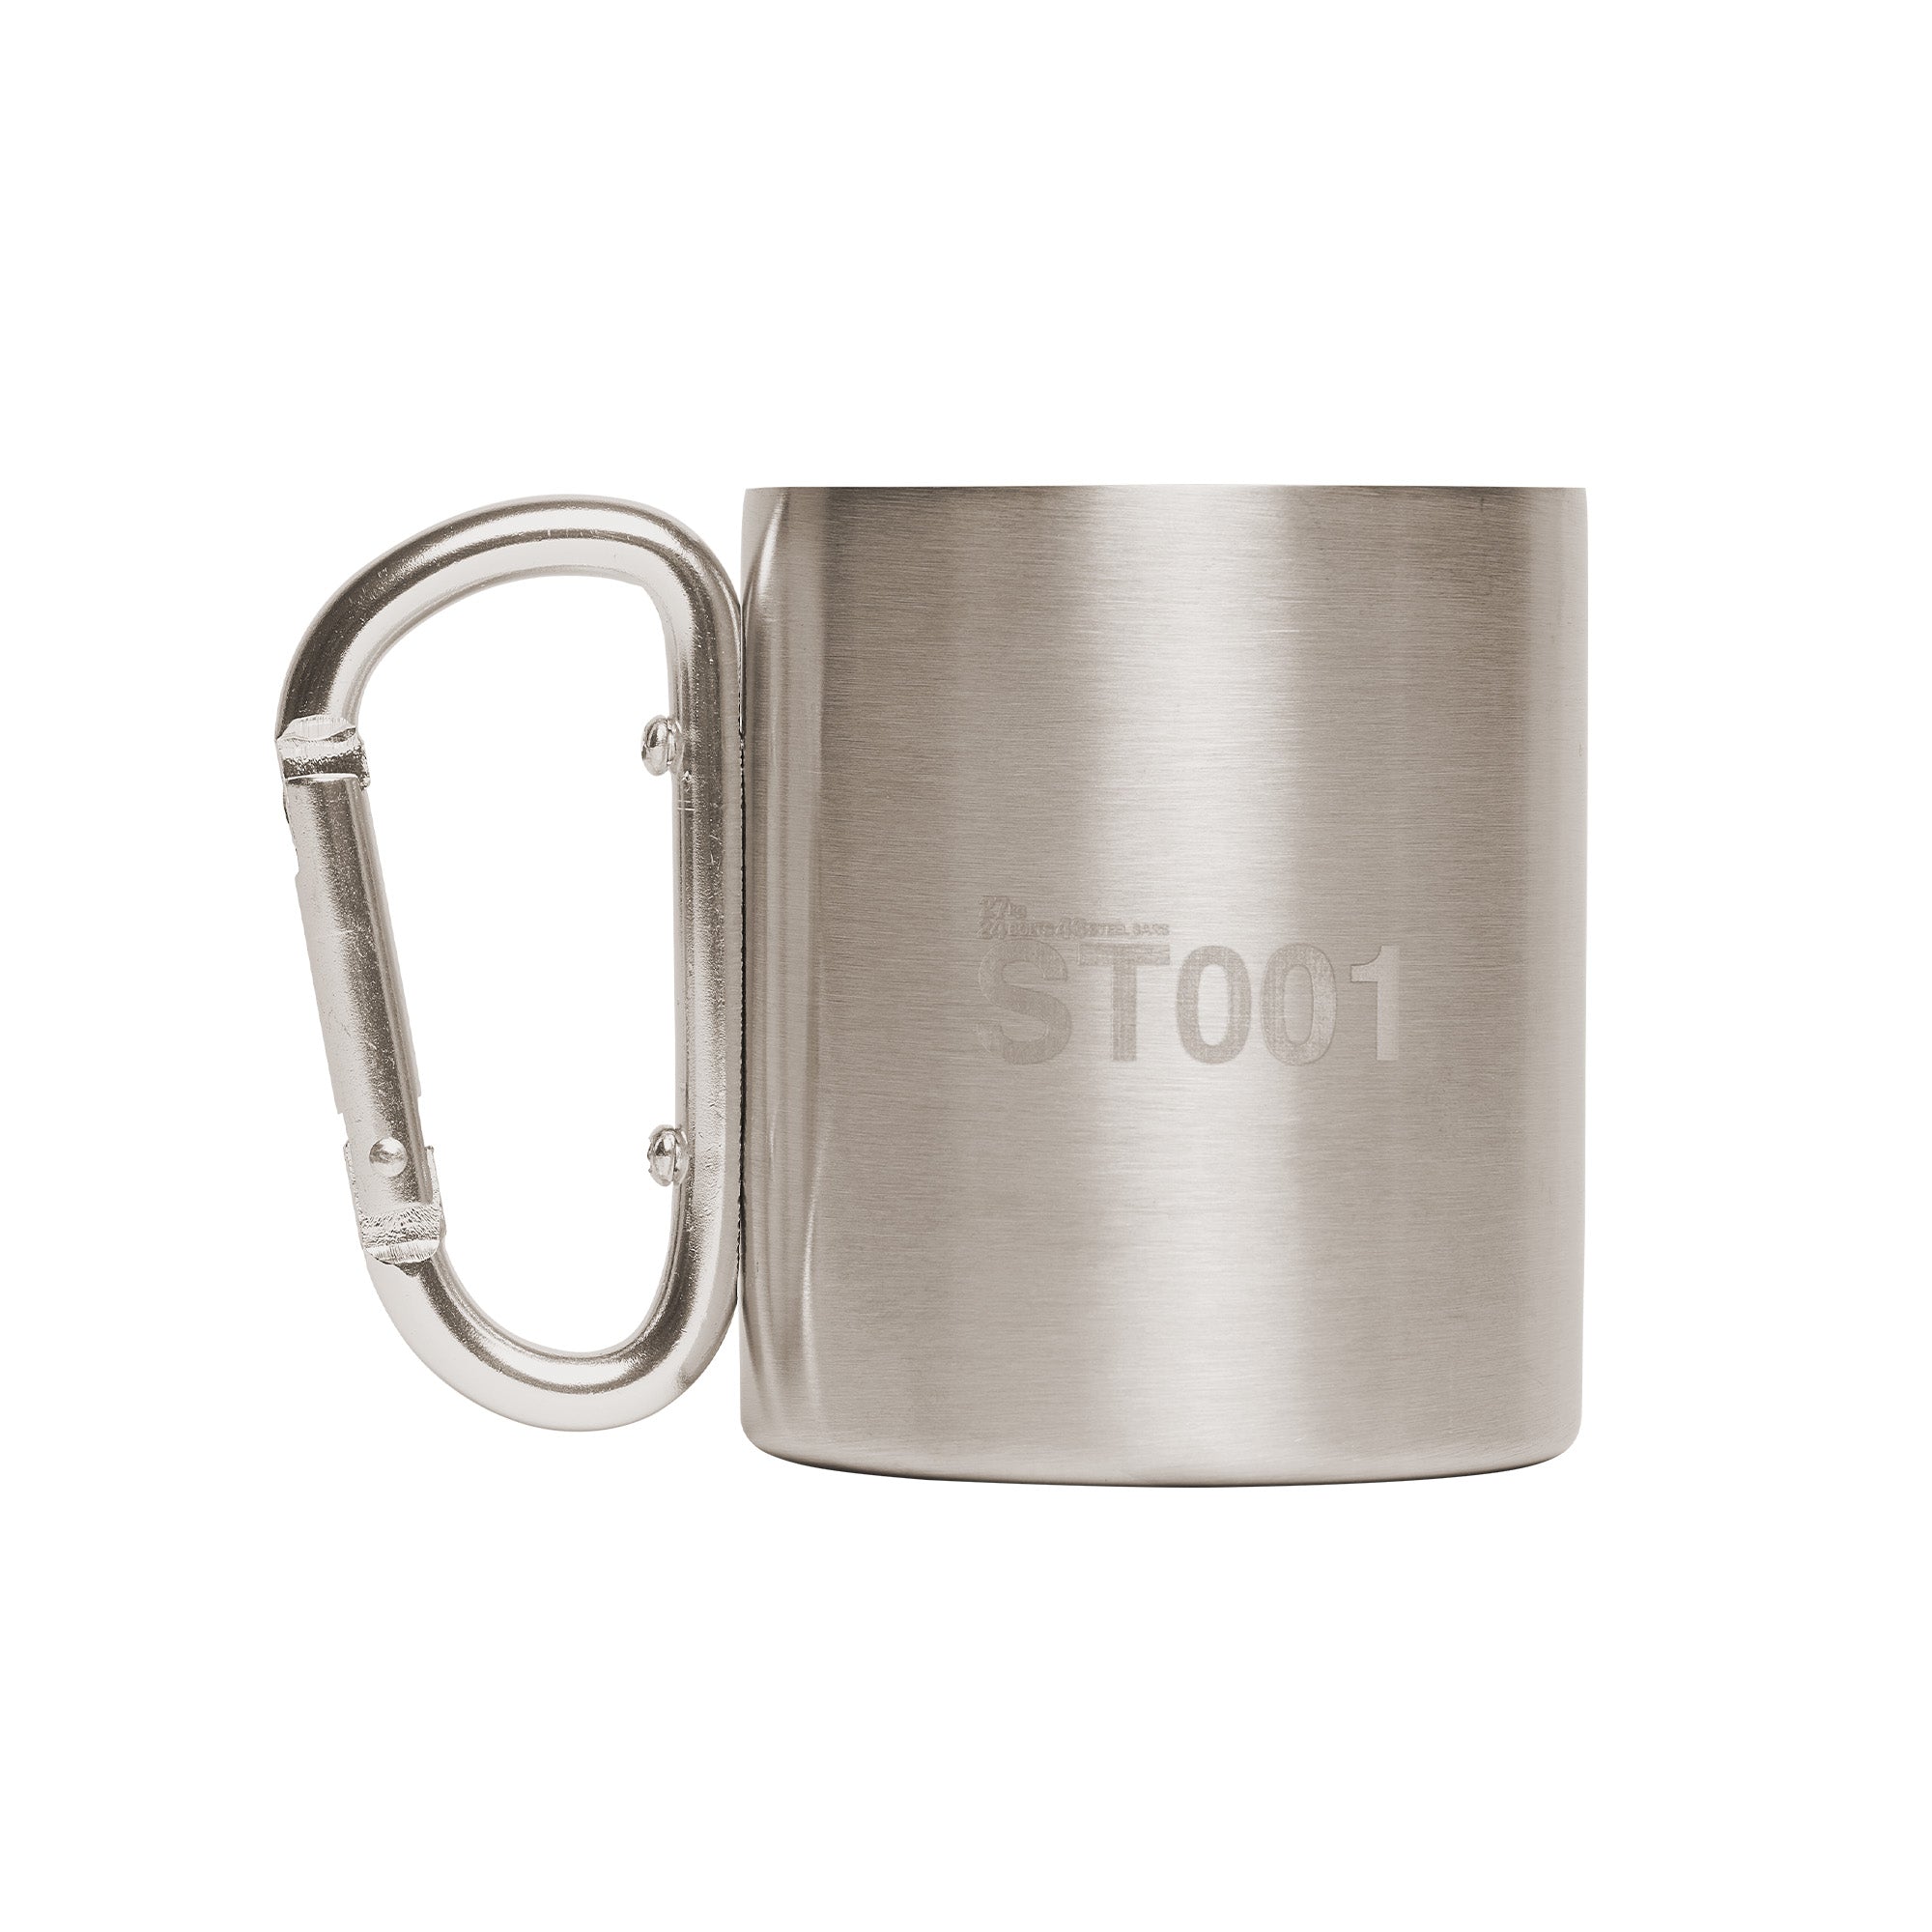 ST001 isolating mug special edition